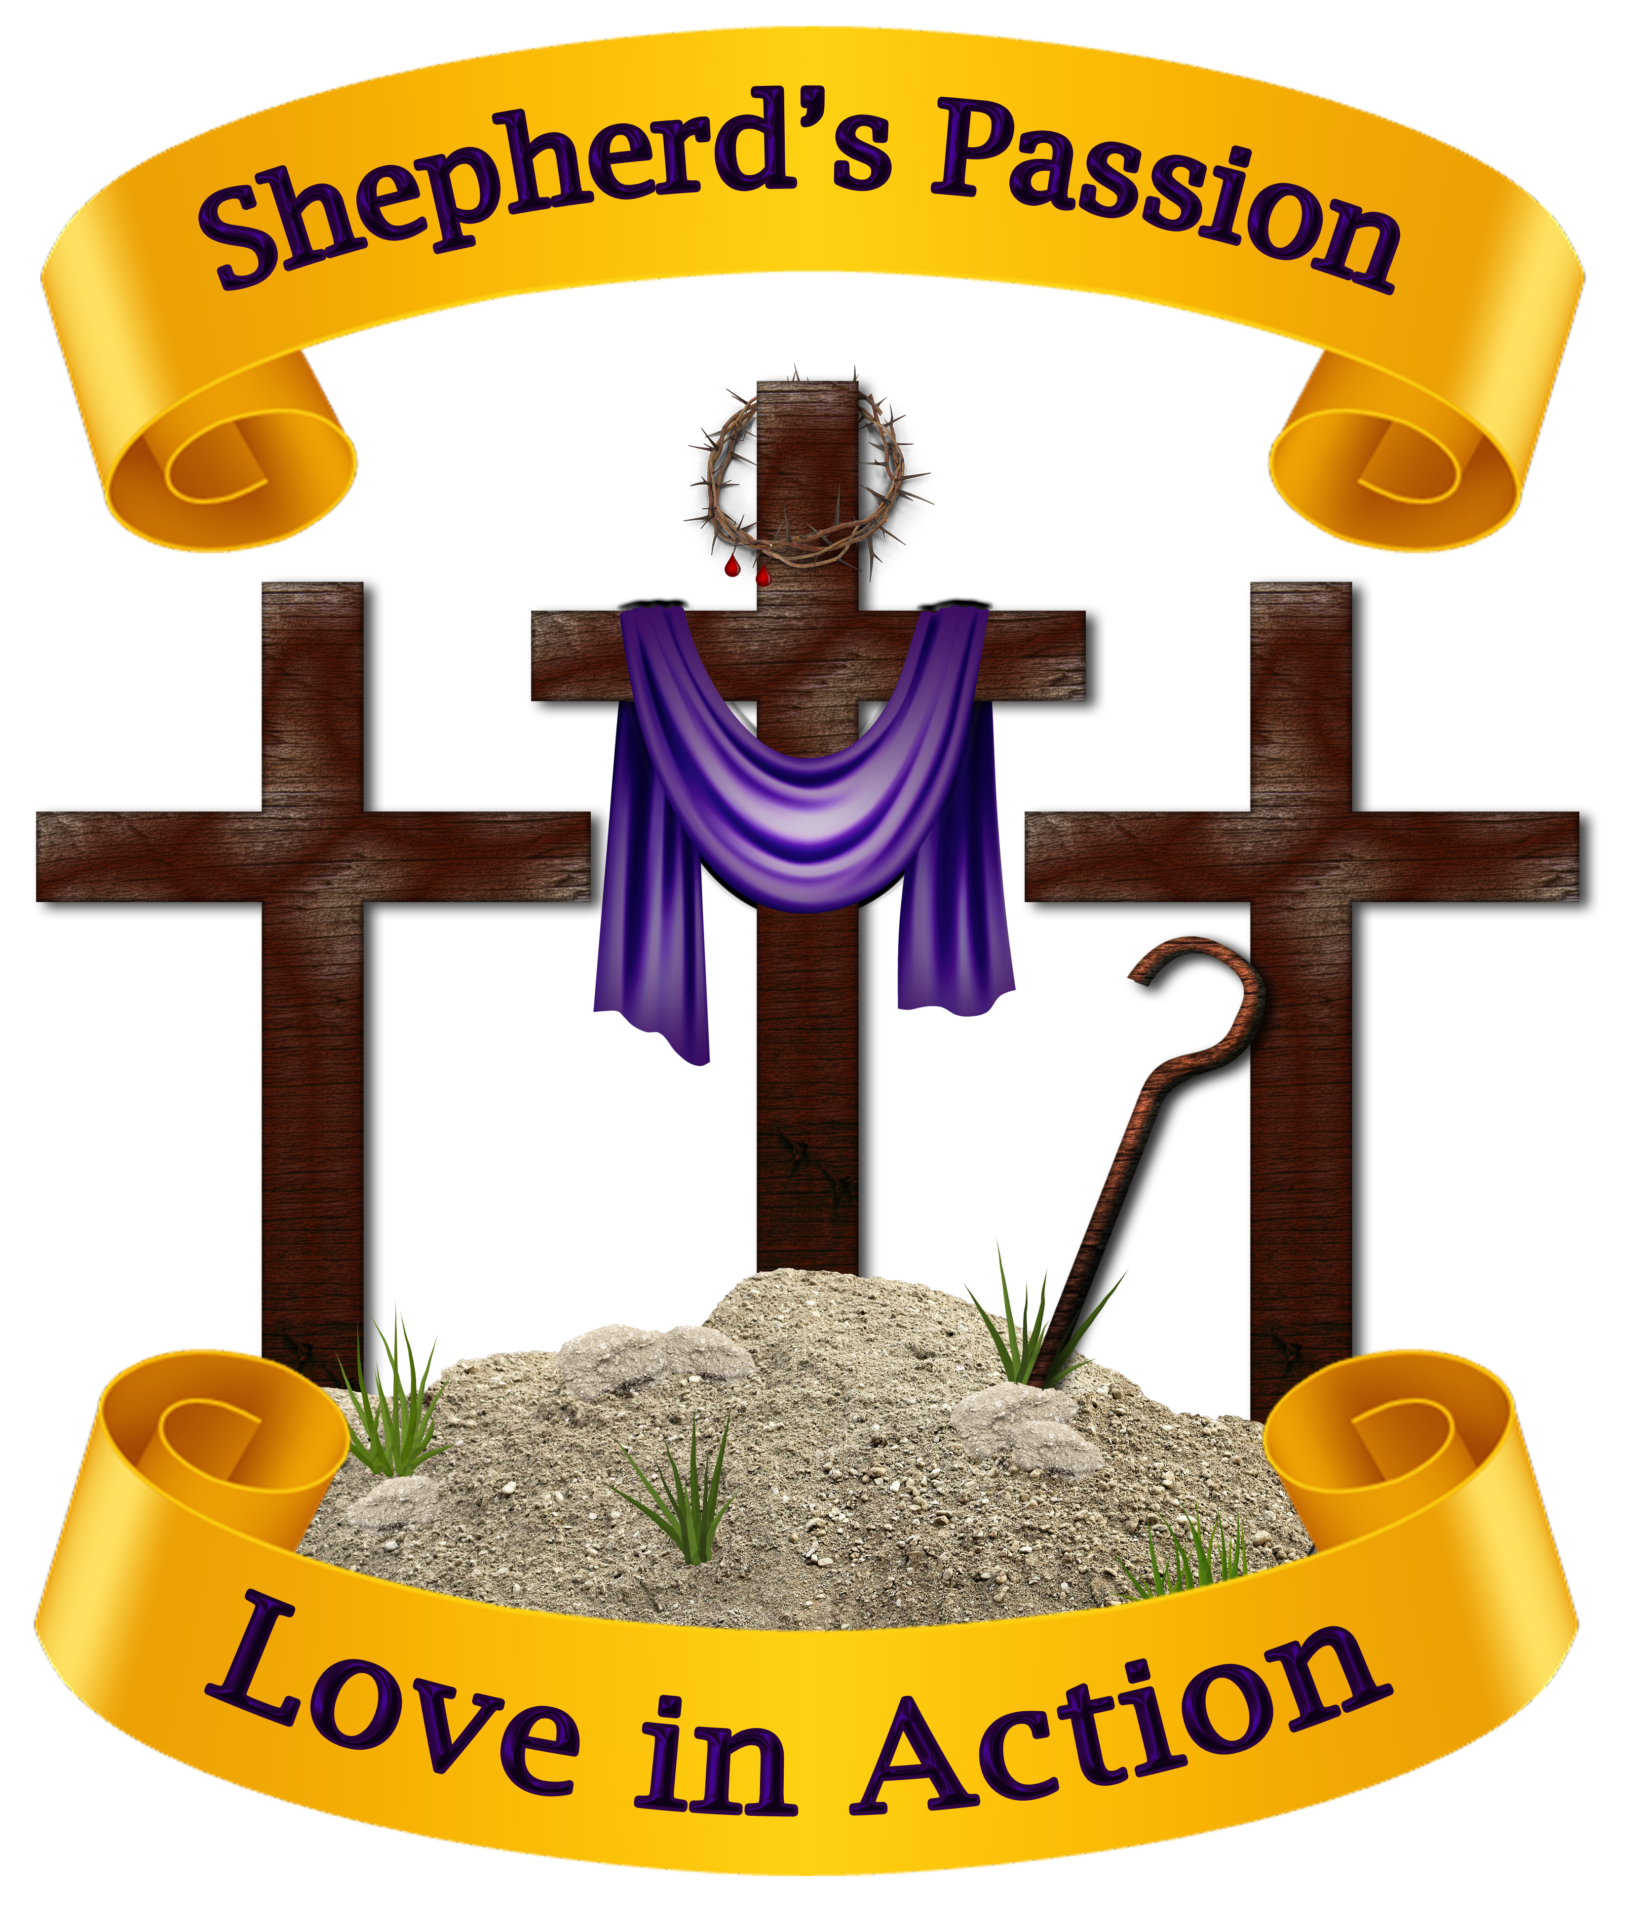 Shepherds passion church